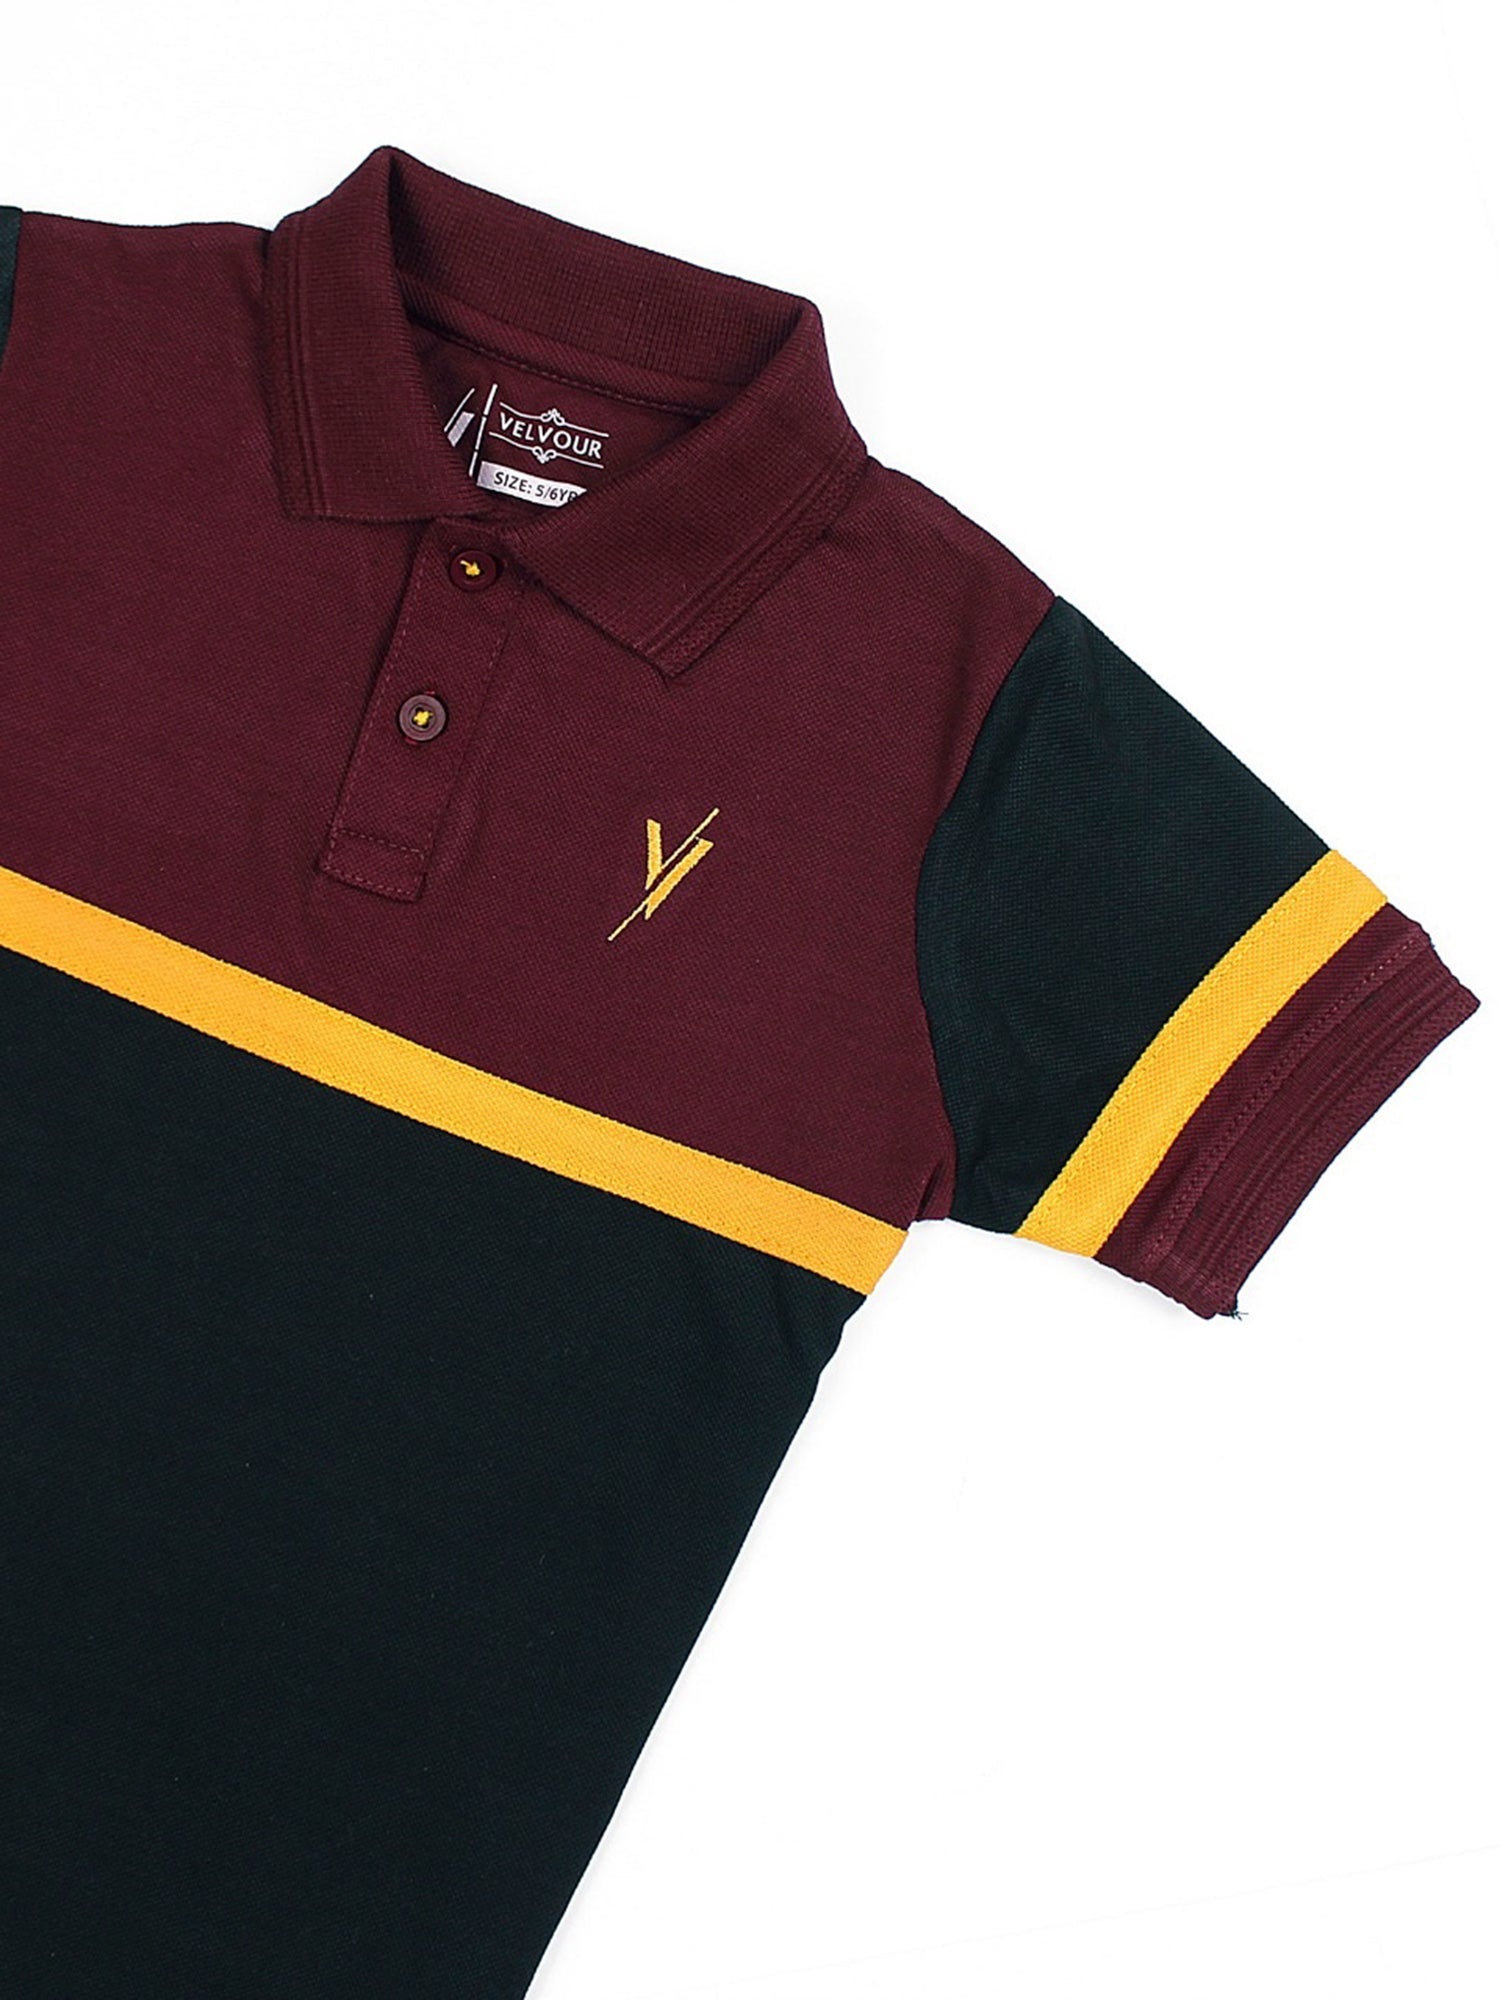 Boys Polo Shirt (Short Sleeve) By Velvour Art# VBP04-A - Velvour Shop